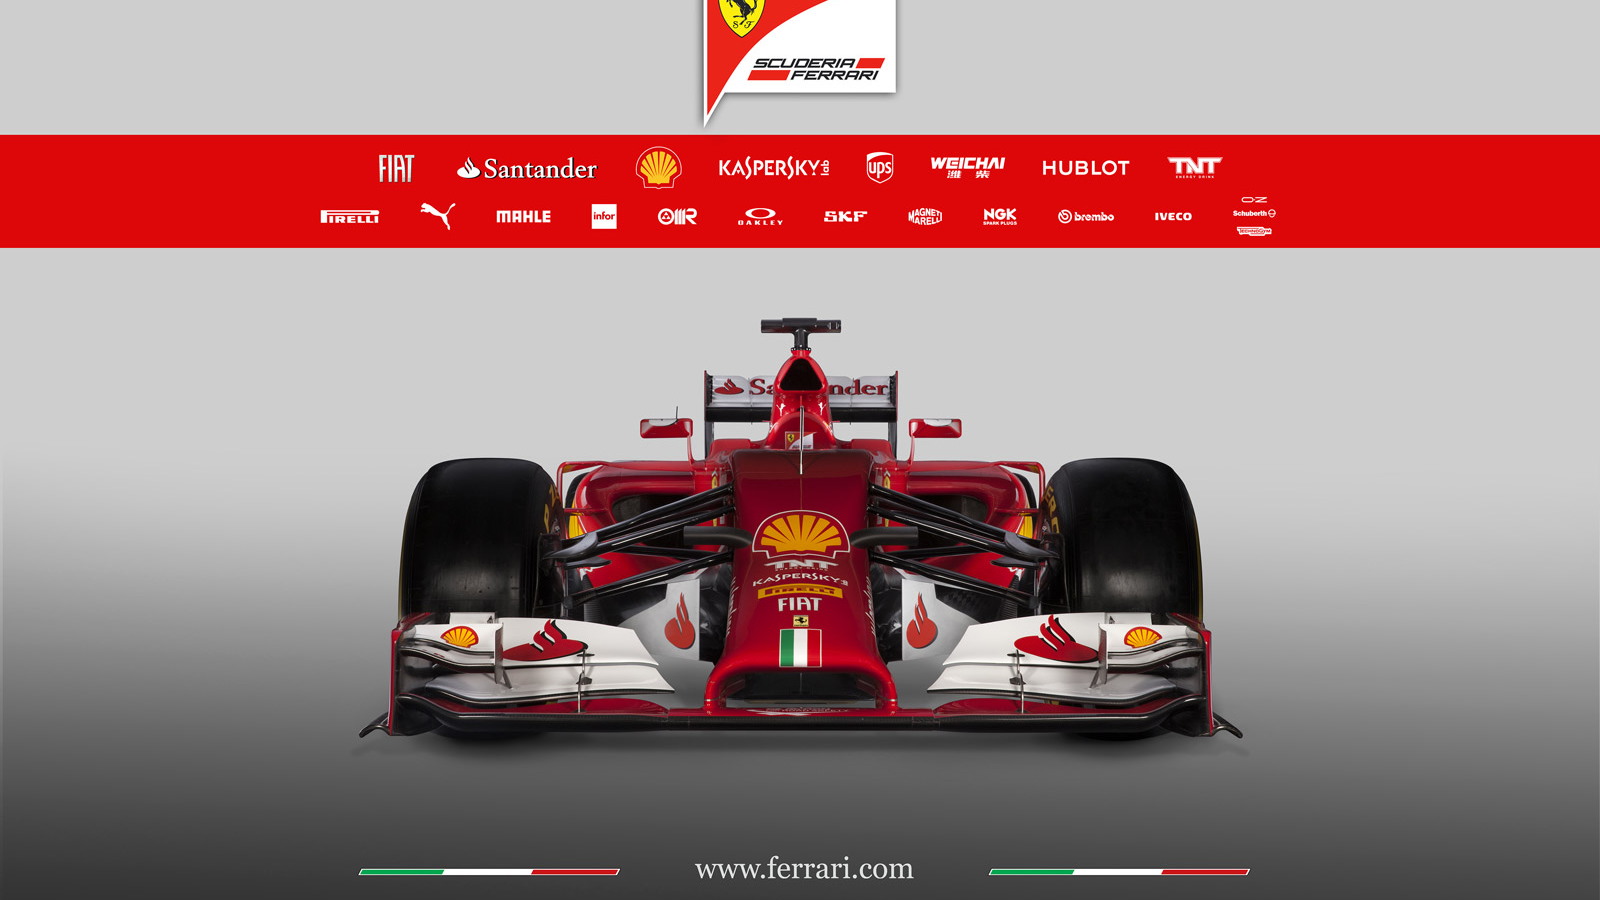 Ferrari's F14 T 2014 Formula One car